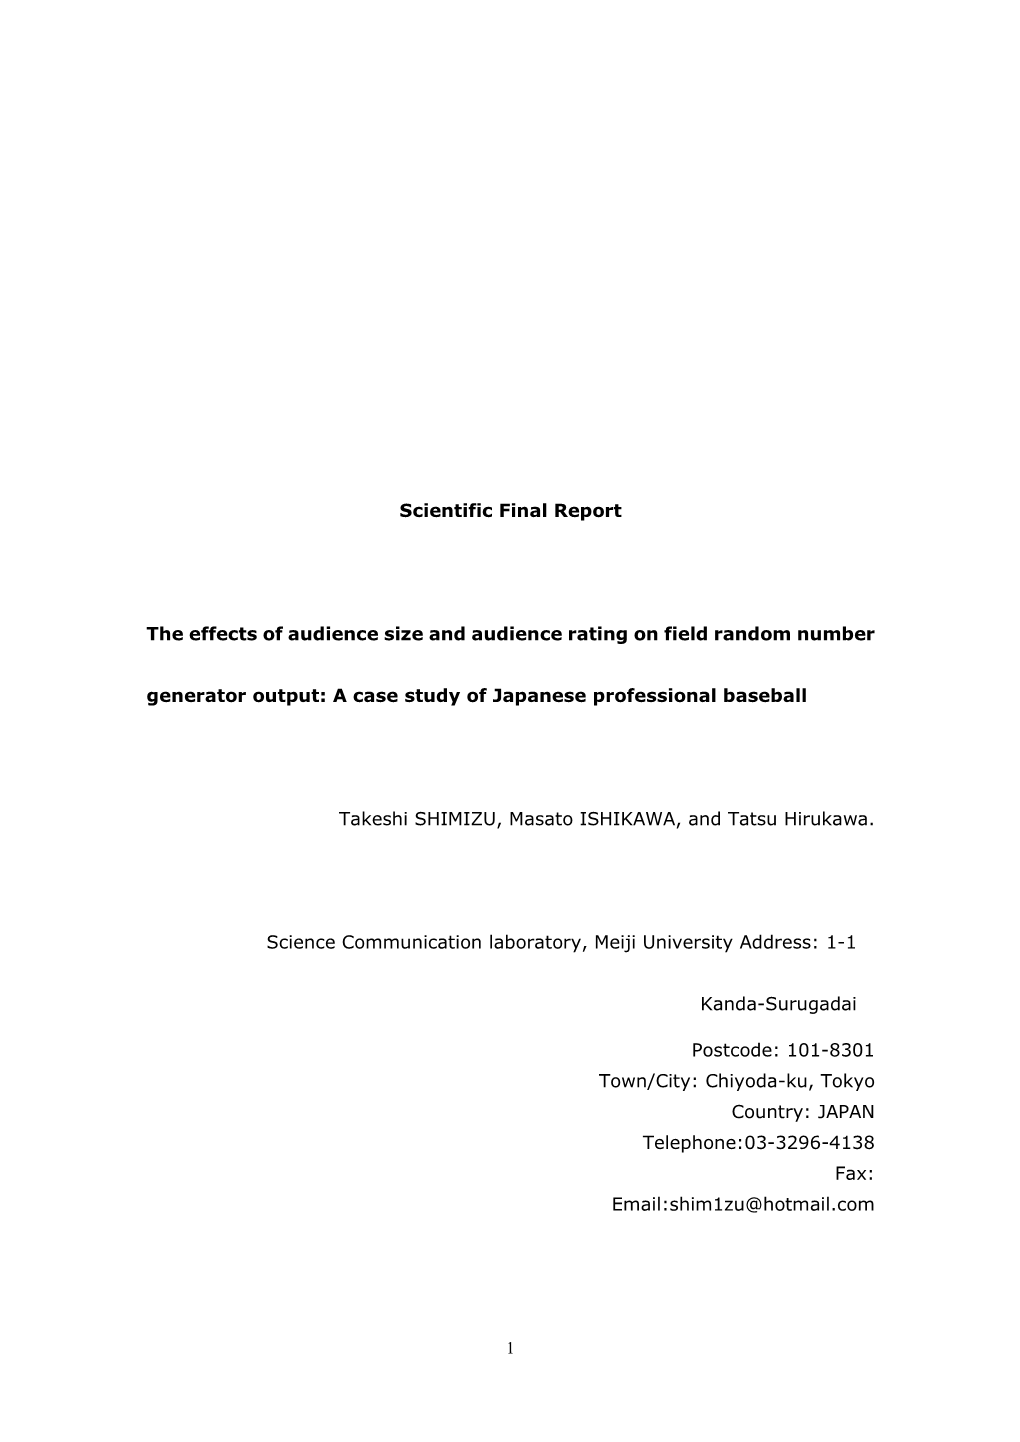 A Case Study of Japanese Professional Baseball